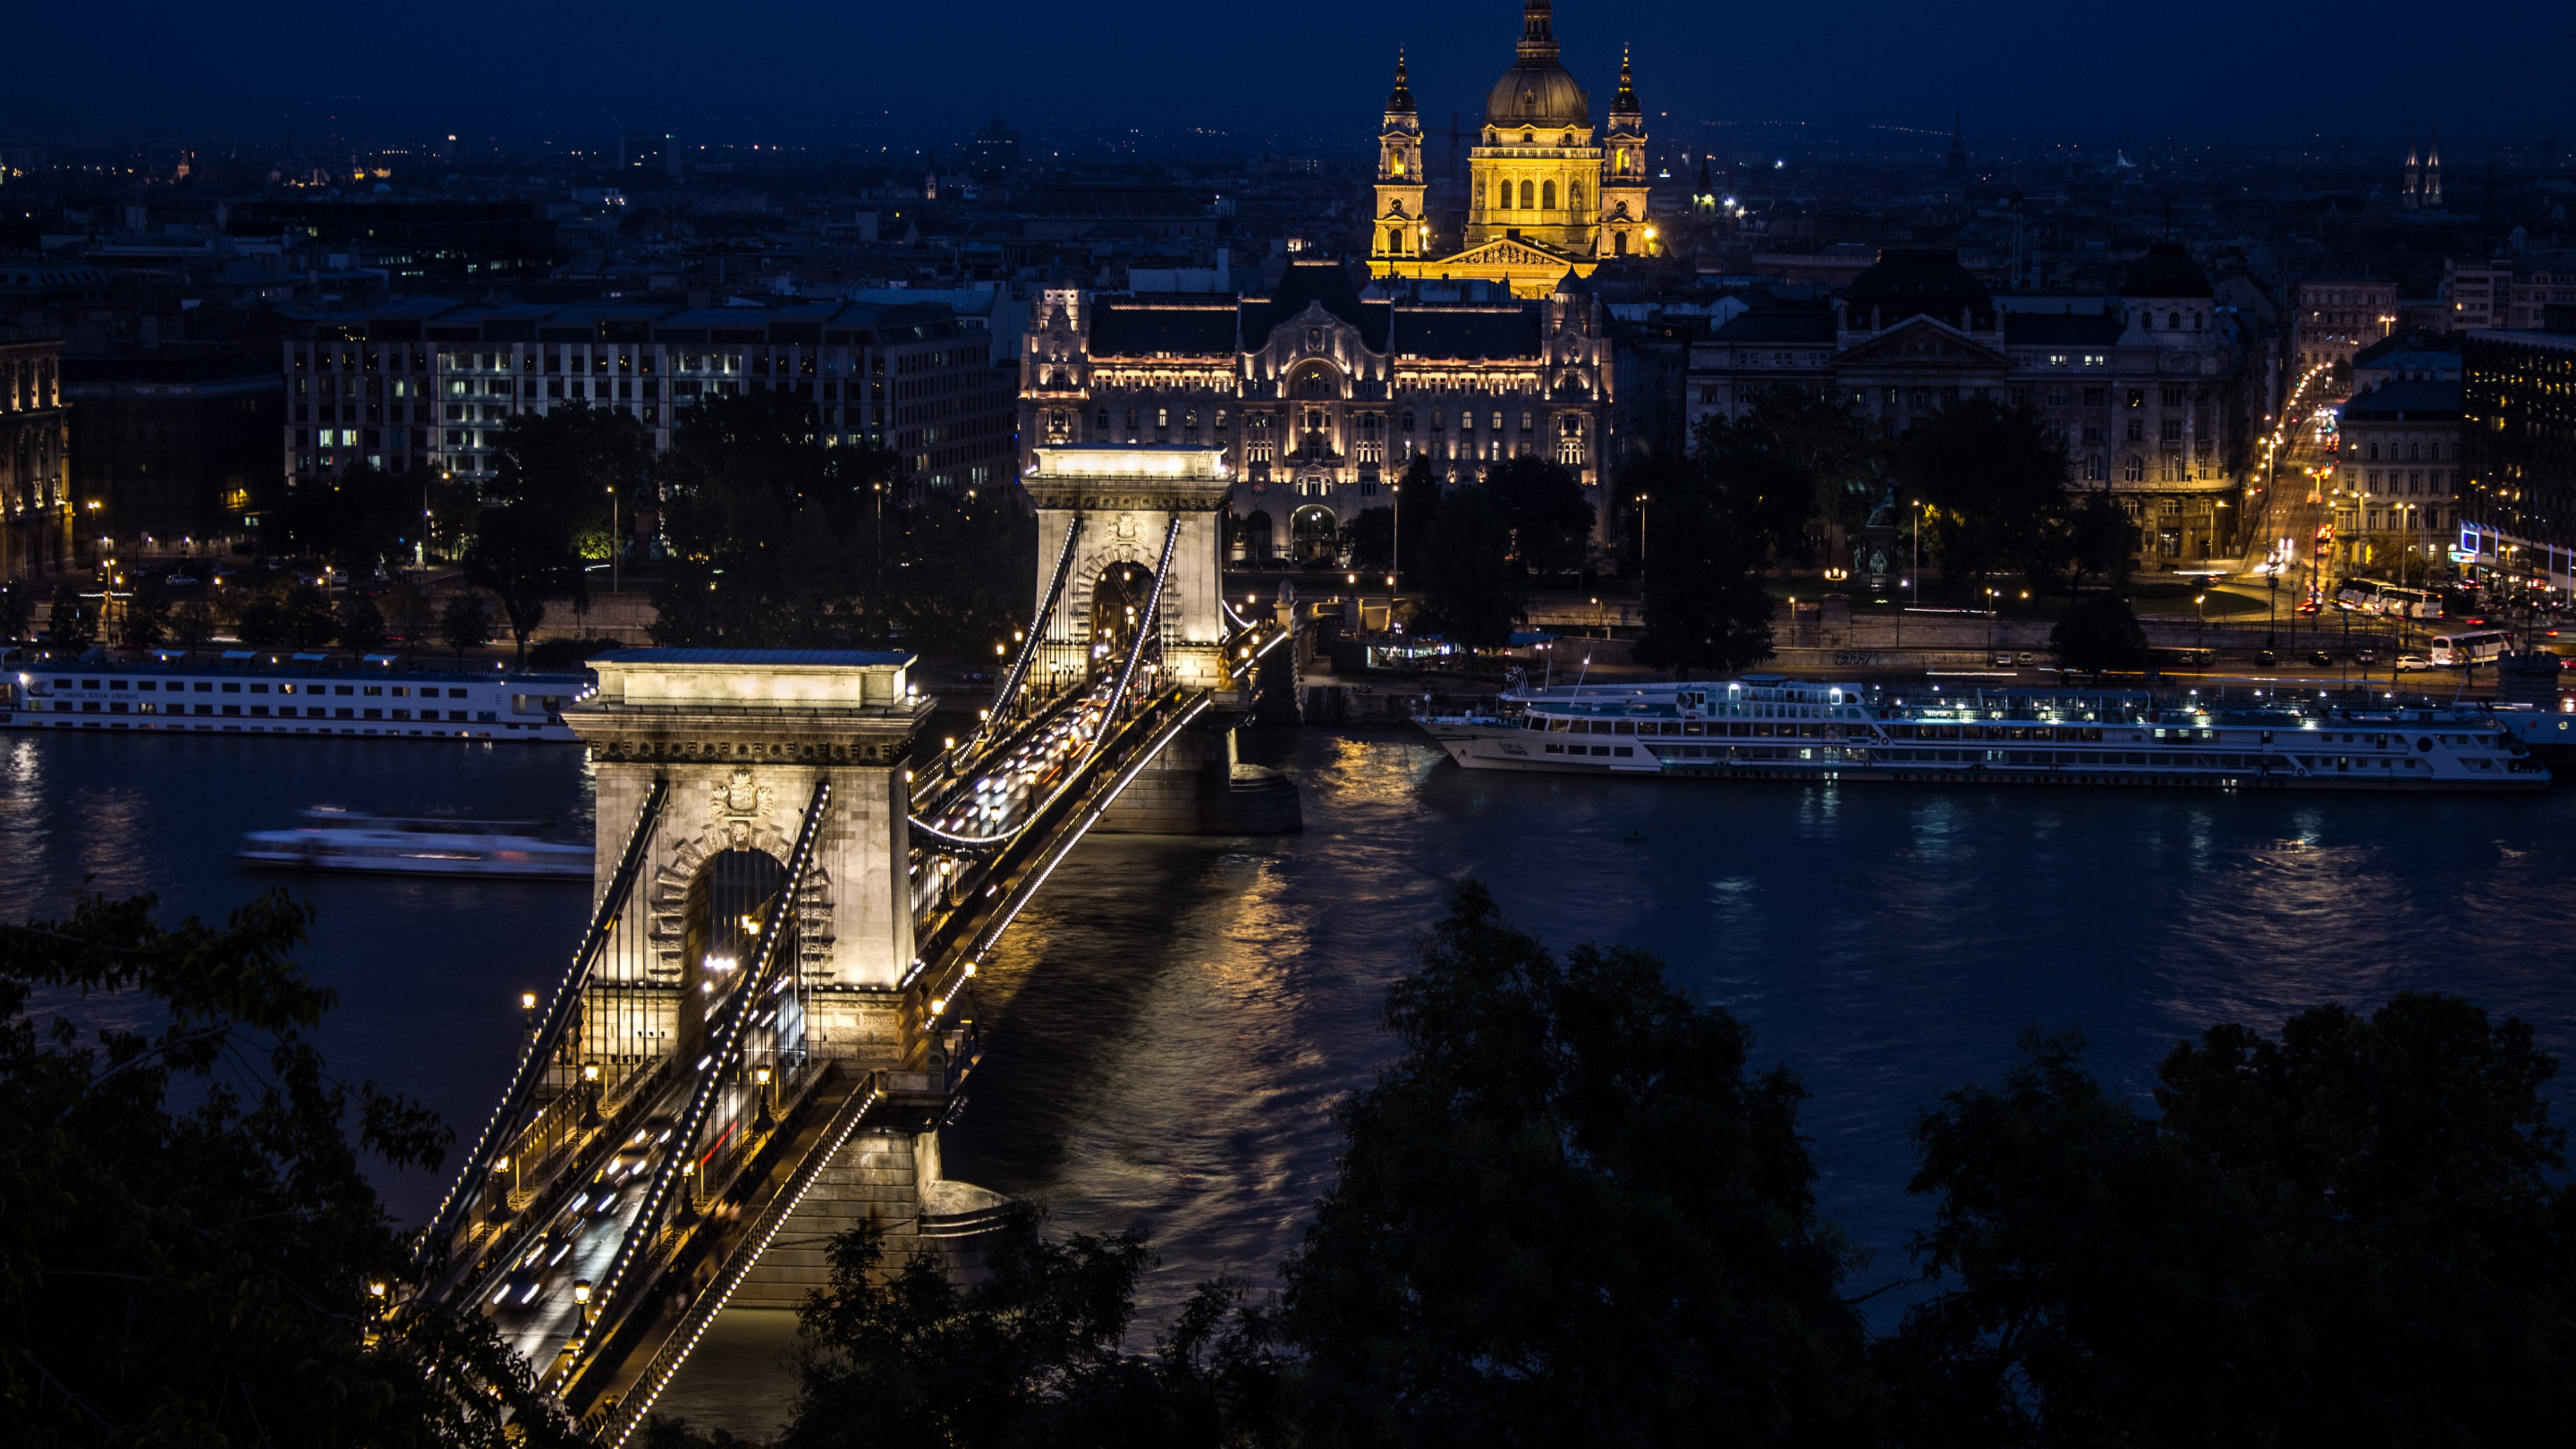 Budapest by Night wallpaper 2880x1620